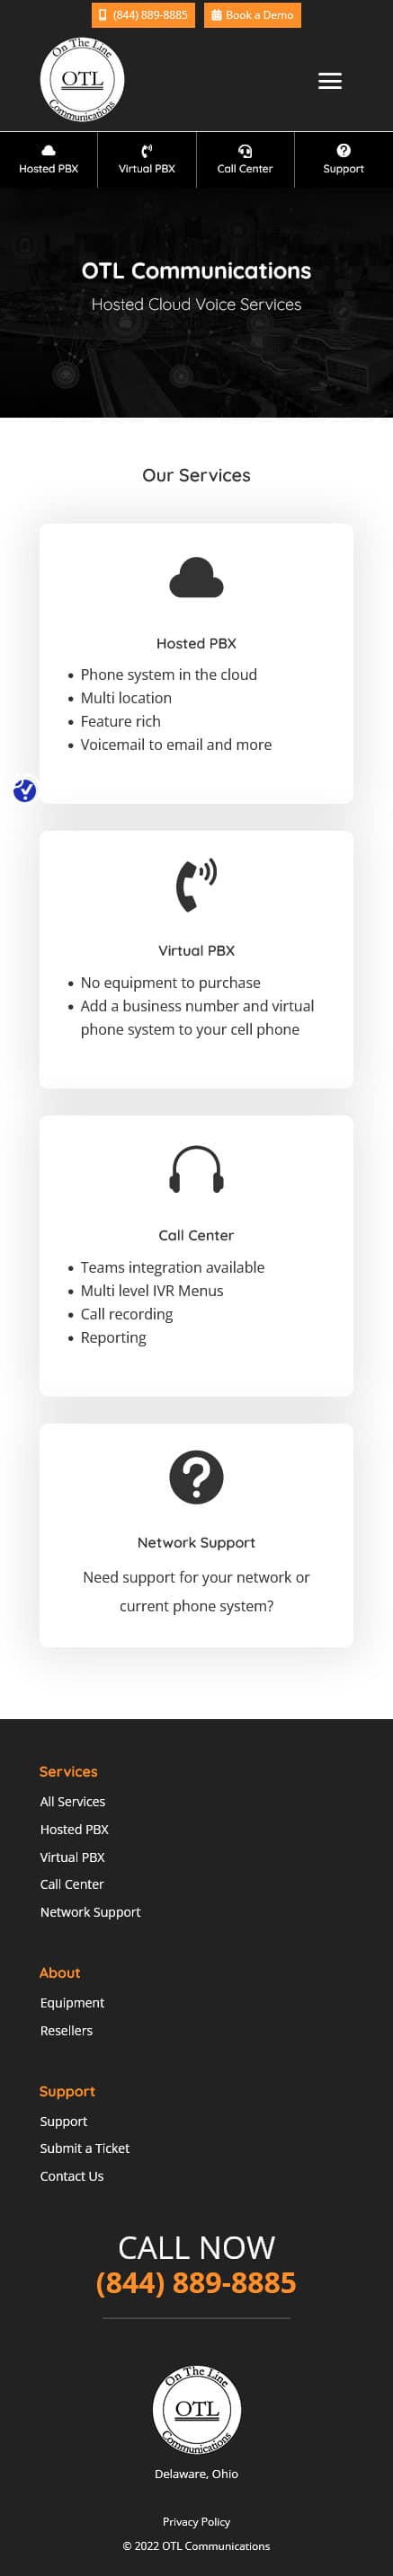 OTL Communications - Mobile Version